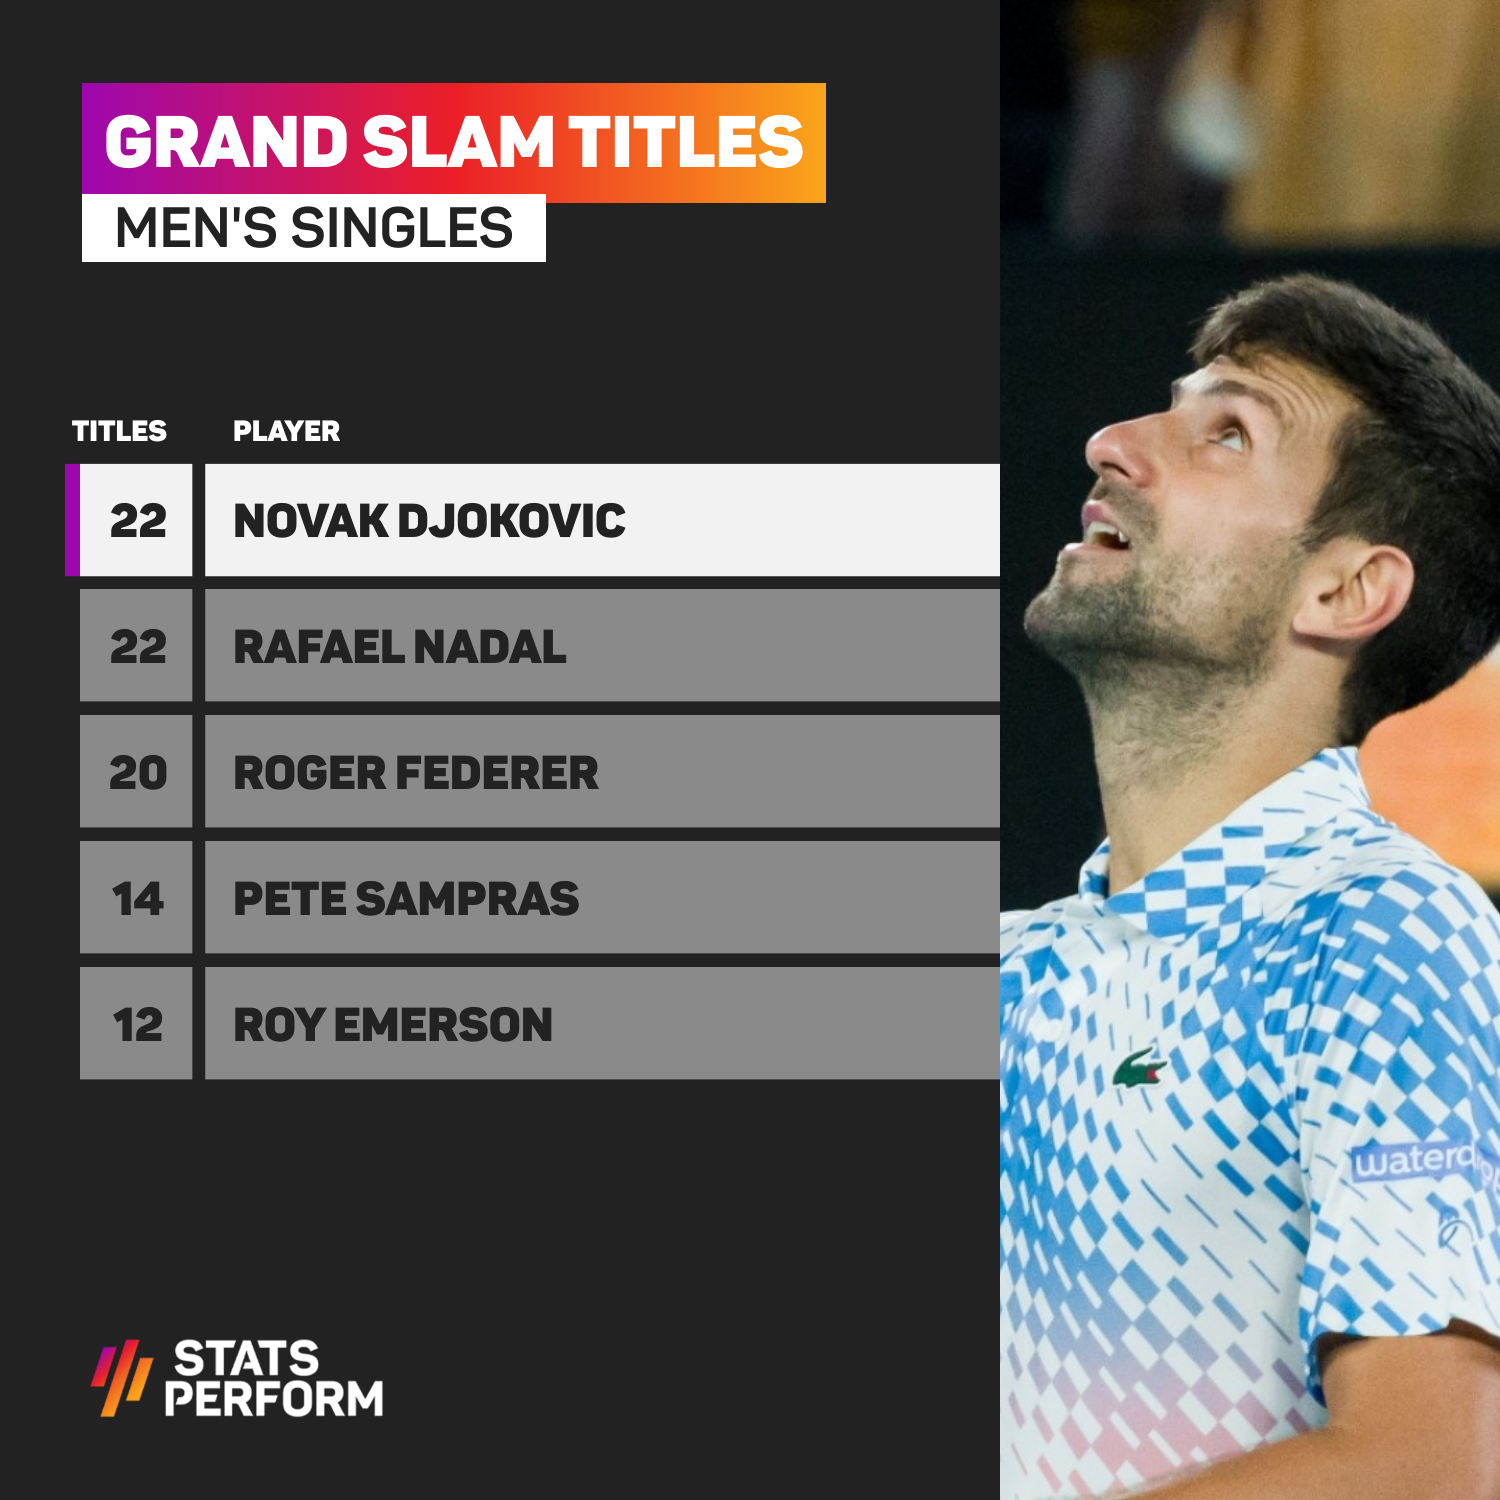 Novak Djokovic has won 22 grand slam titles